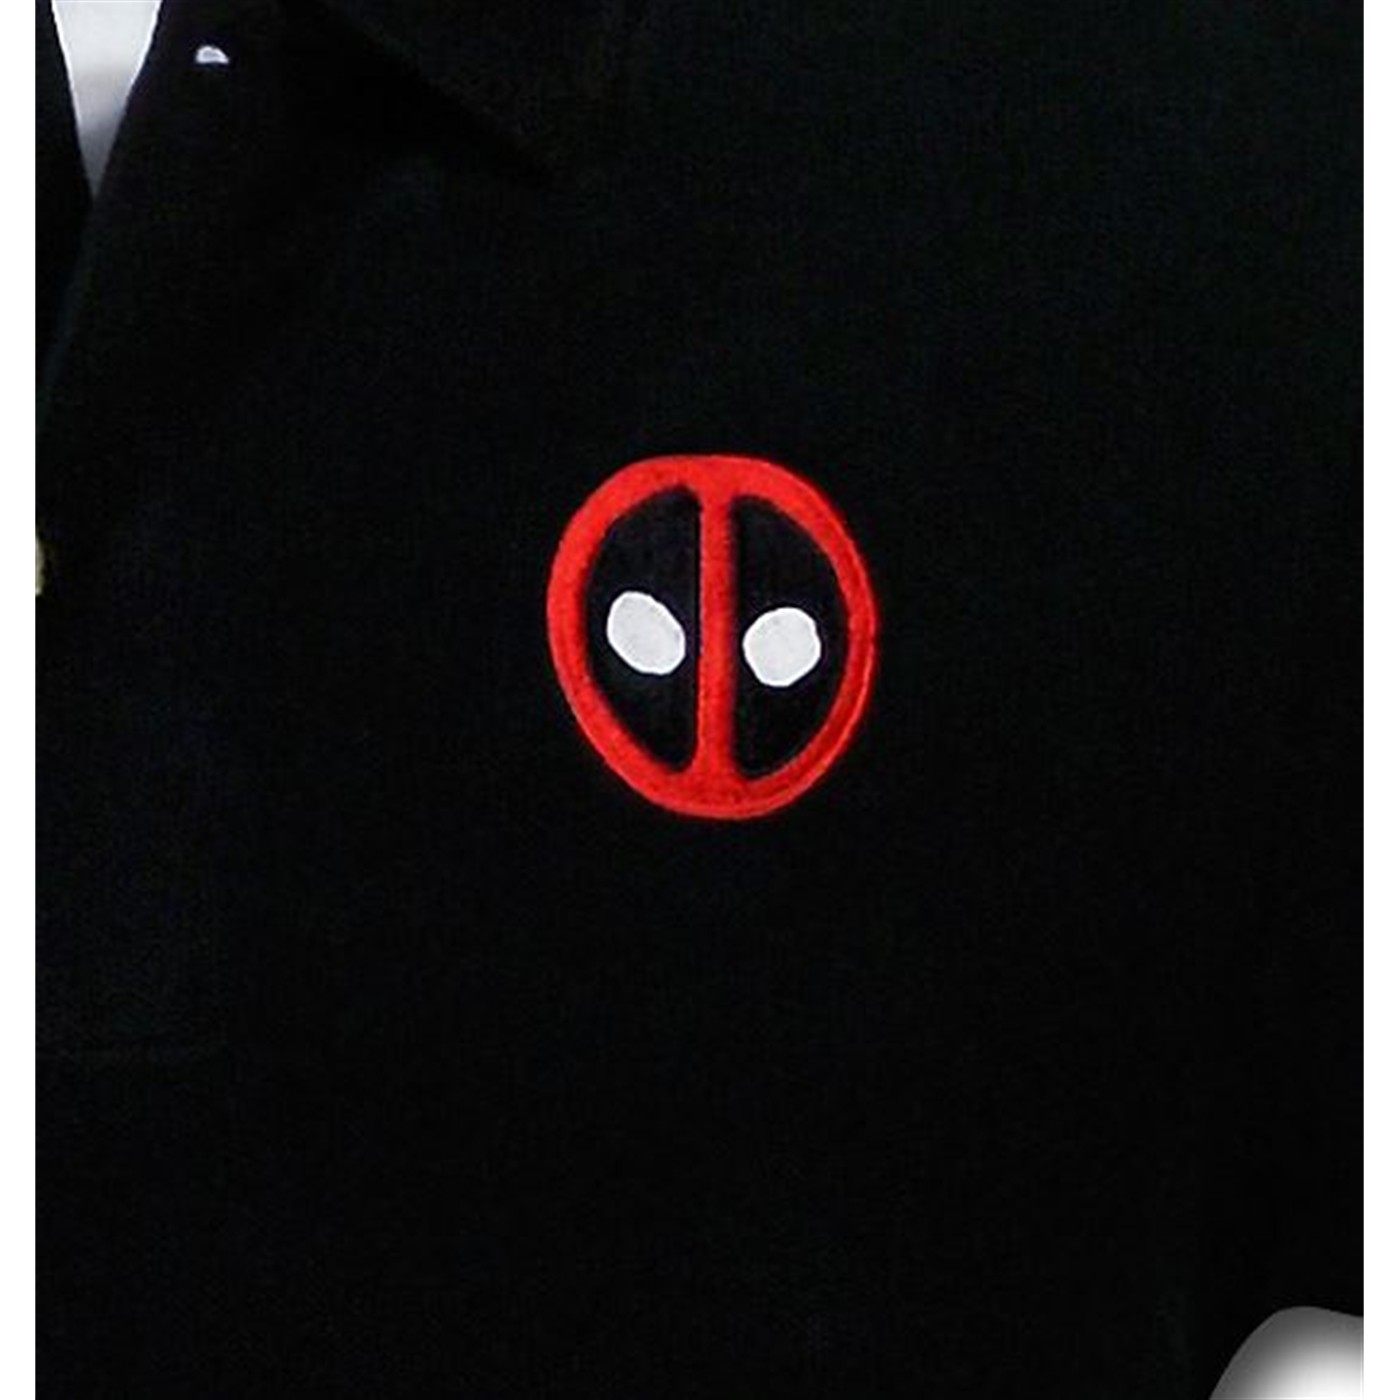 Deadpool Symbol Men's Polo Shirt